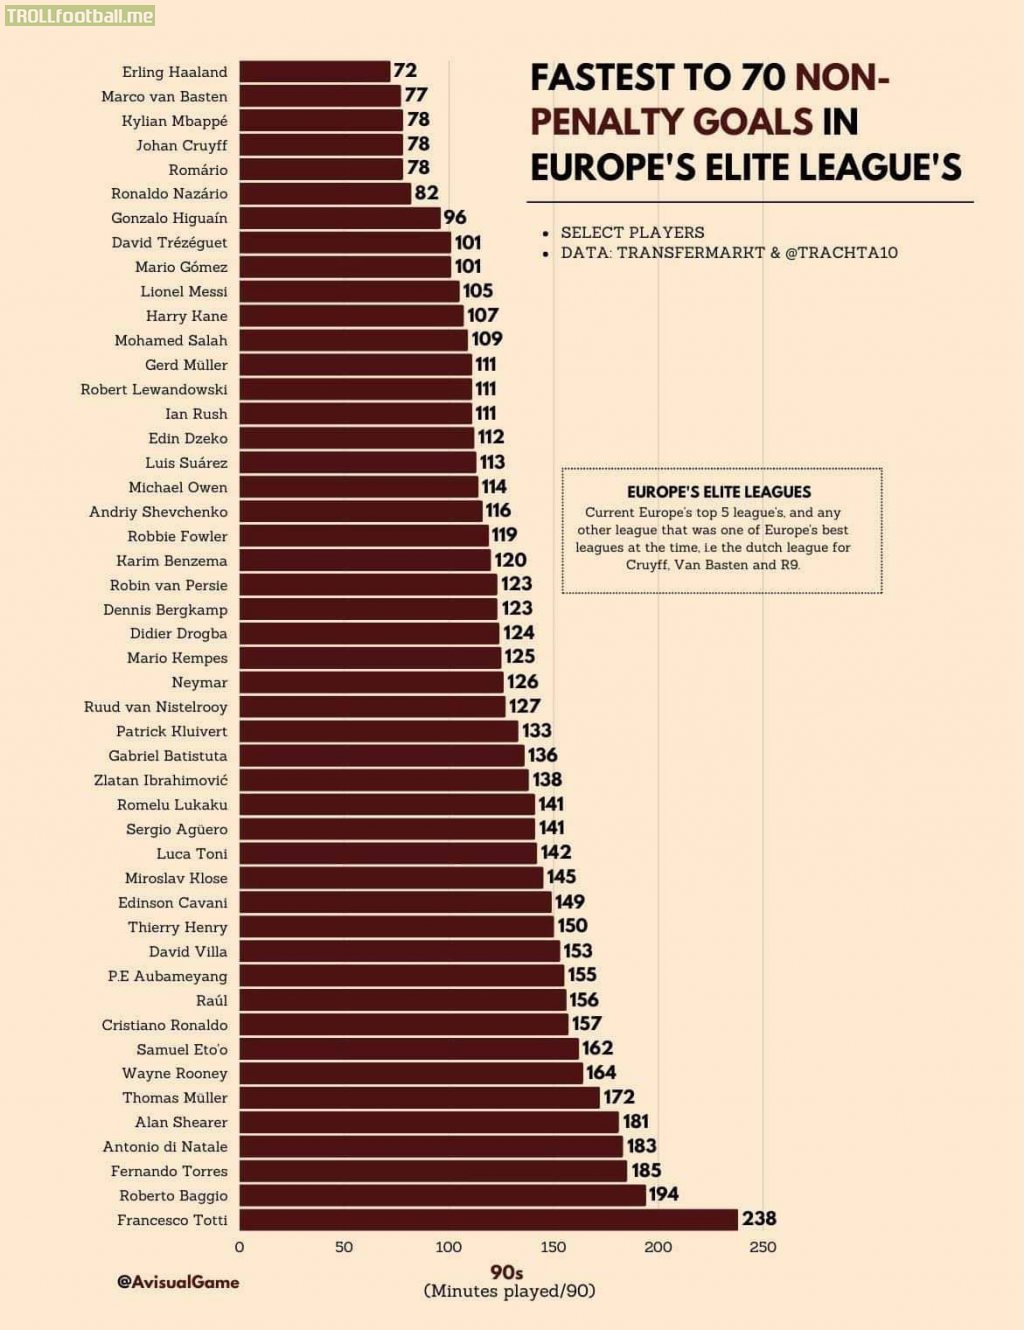 [avisualgame] Fastest to 70 non-penalty goals in Europe’s elite leagues